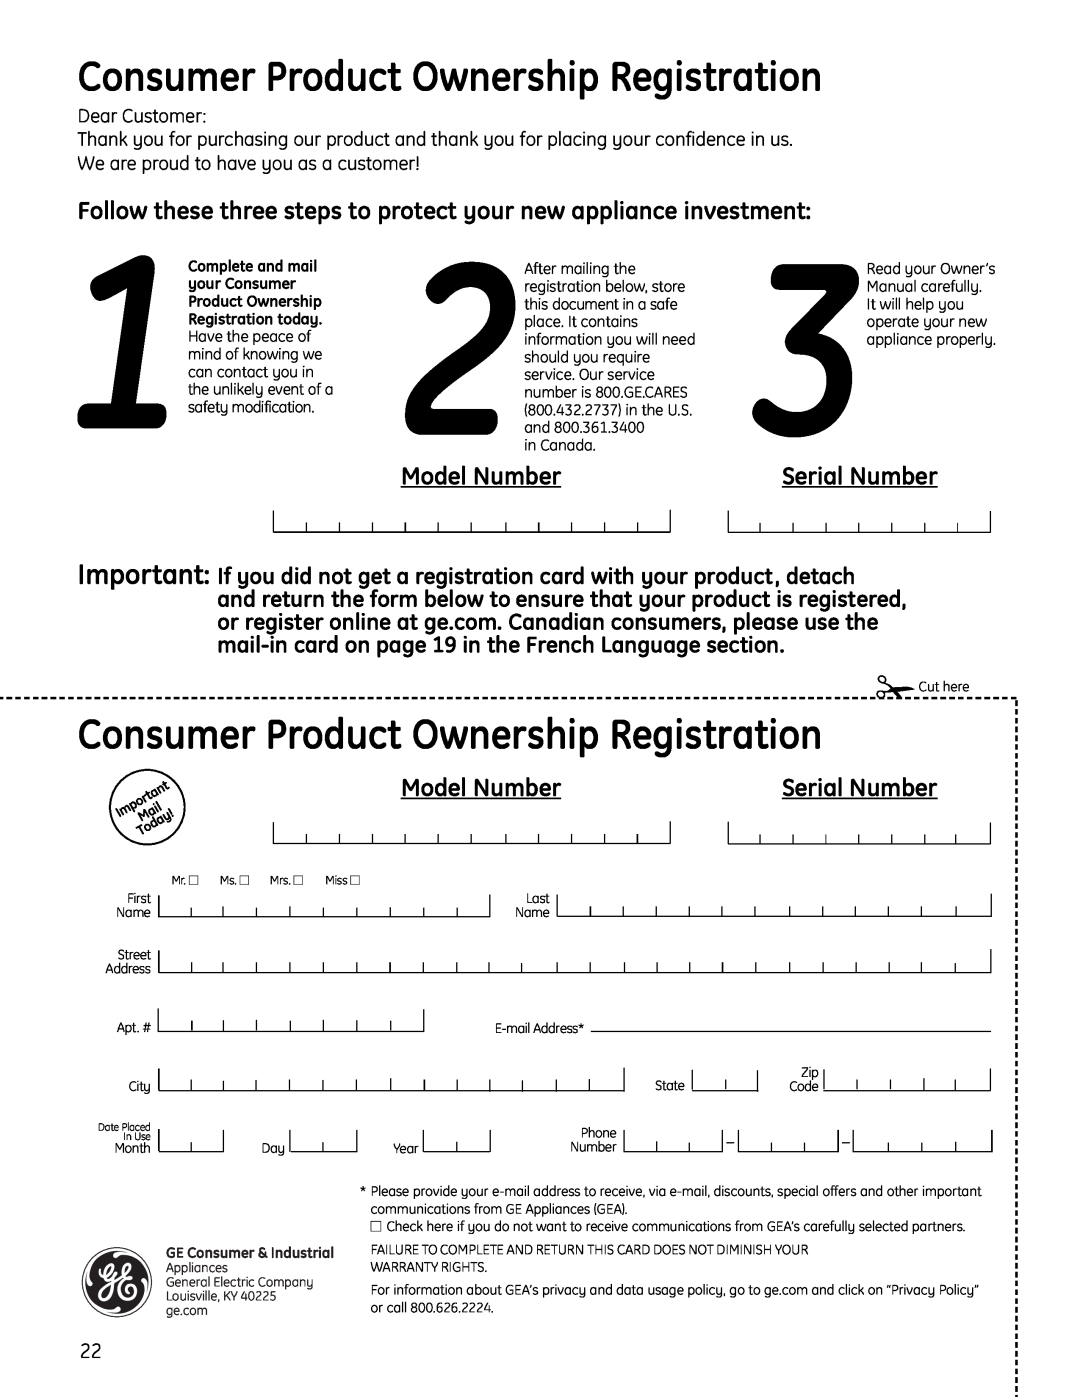 GE Stainless Steel Tub Dishwasher manual Model2Number, Model Number, Serial Number, Consumer Product Ownership Registration 